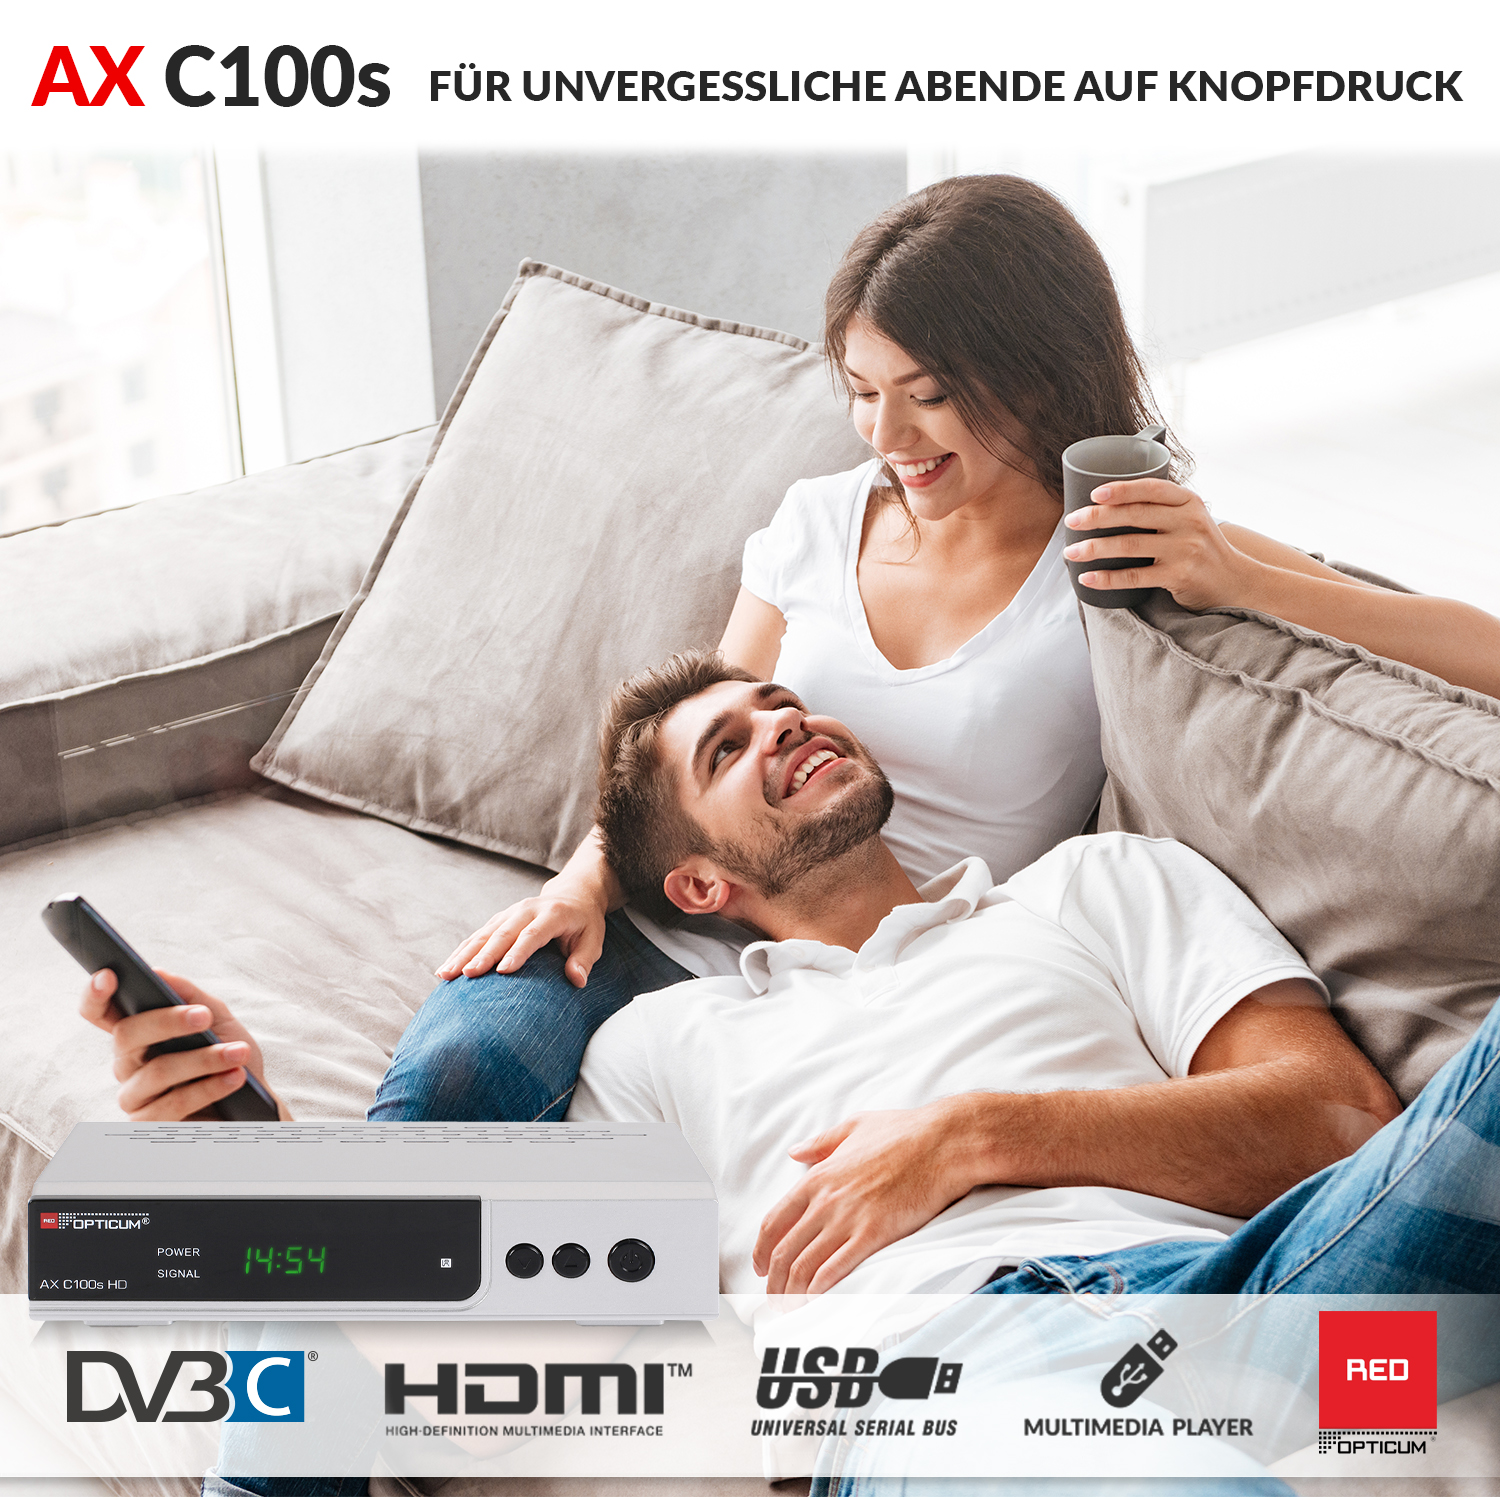 (HDTV, I Digitaler AX C100s PVR-Funktion, mit HD OPTICUM Kabelreceiver PVR-Aufnahmefunktion RED DVB-C2, silber) DVB-C, Kabel-Receiver Receiver DVB-C HD-EPG-HDMI-USB-SCART